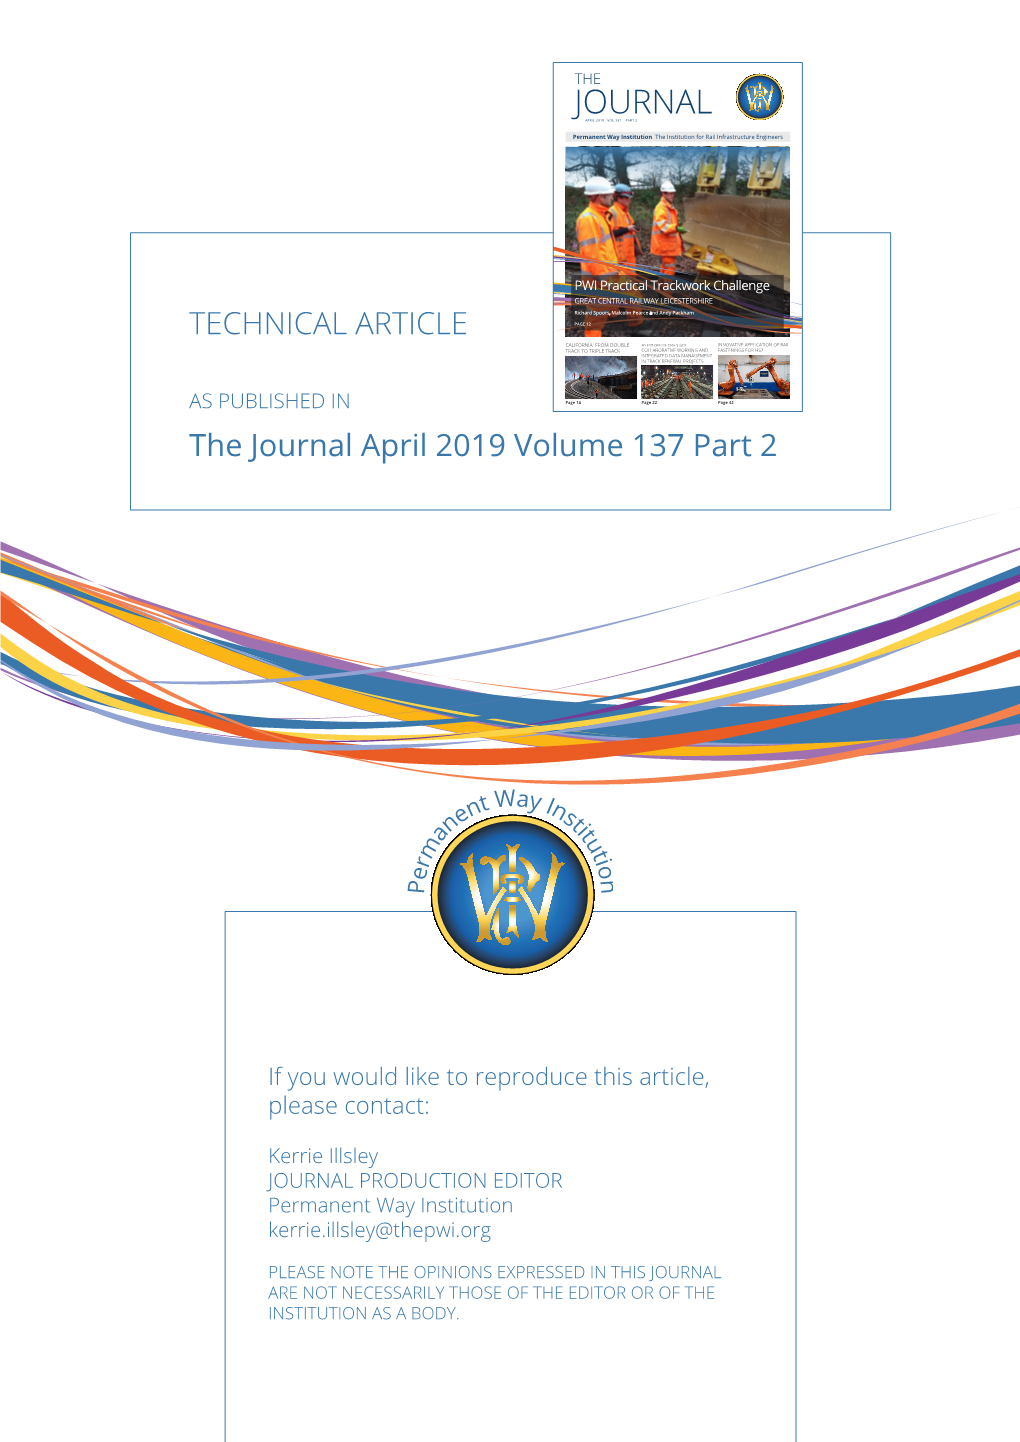 TECHNICAL ARTICLE the Journal April 2019 Volume 137 Part 2